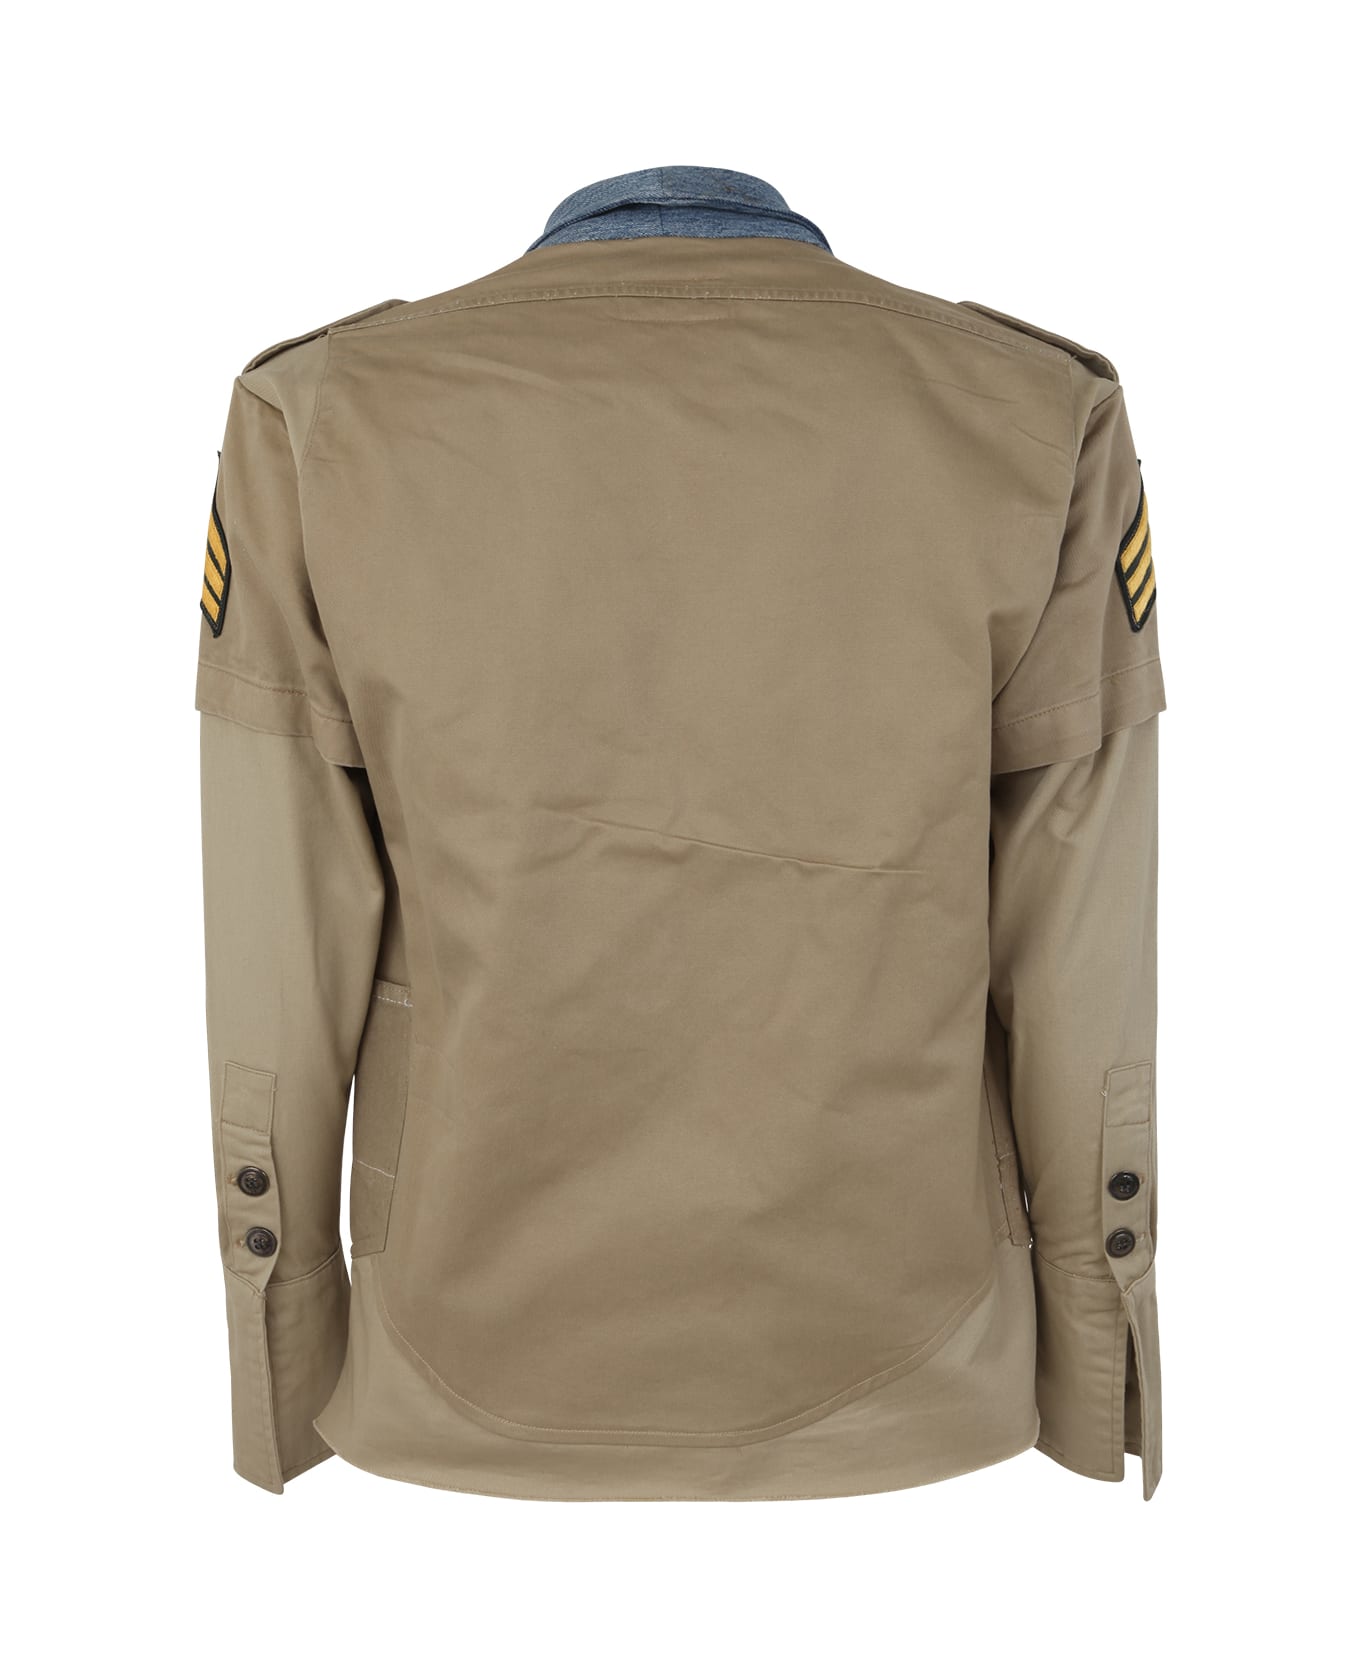 Greg Lauren Khaki Uniform Gl1 Jacket - Tan